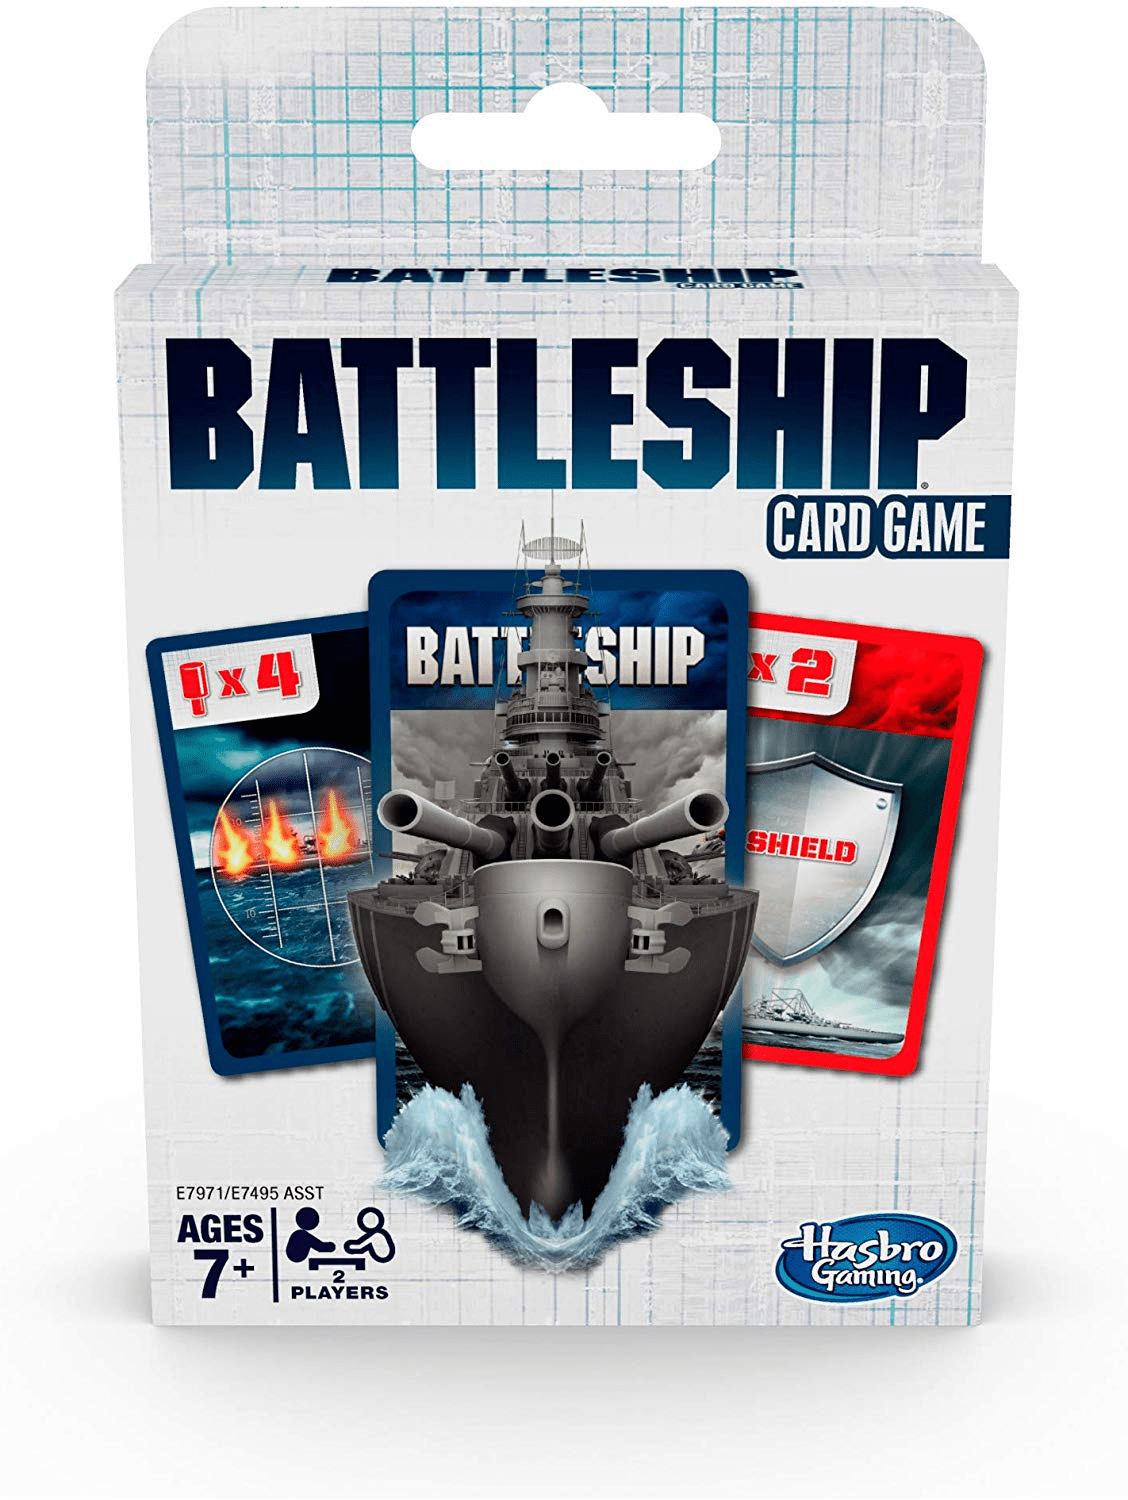 Battleship - Card Game by Hasbro - Waterfront News